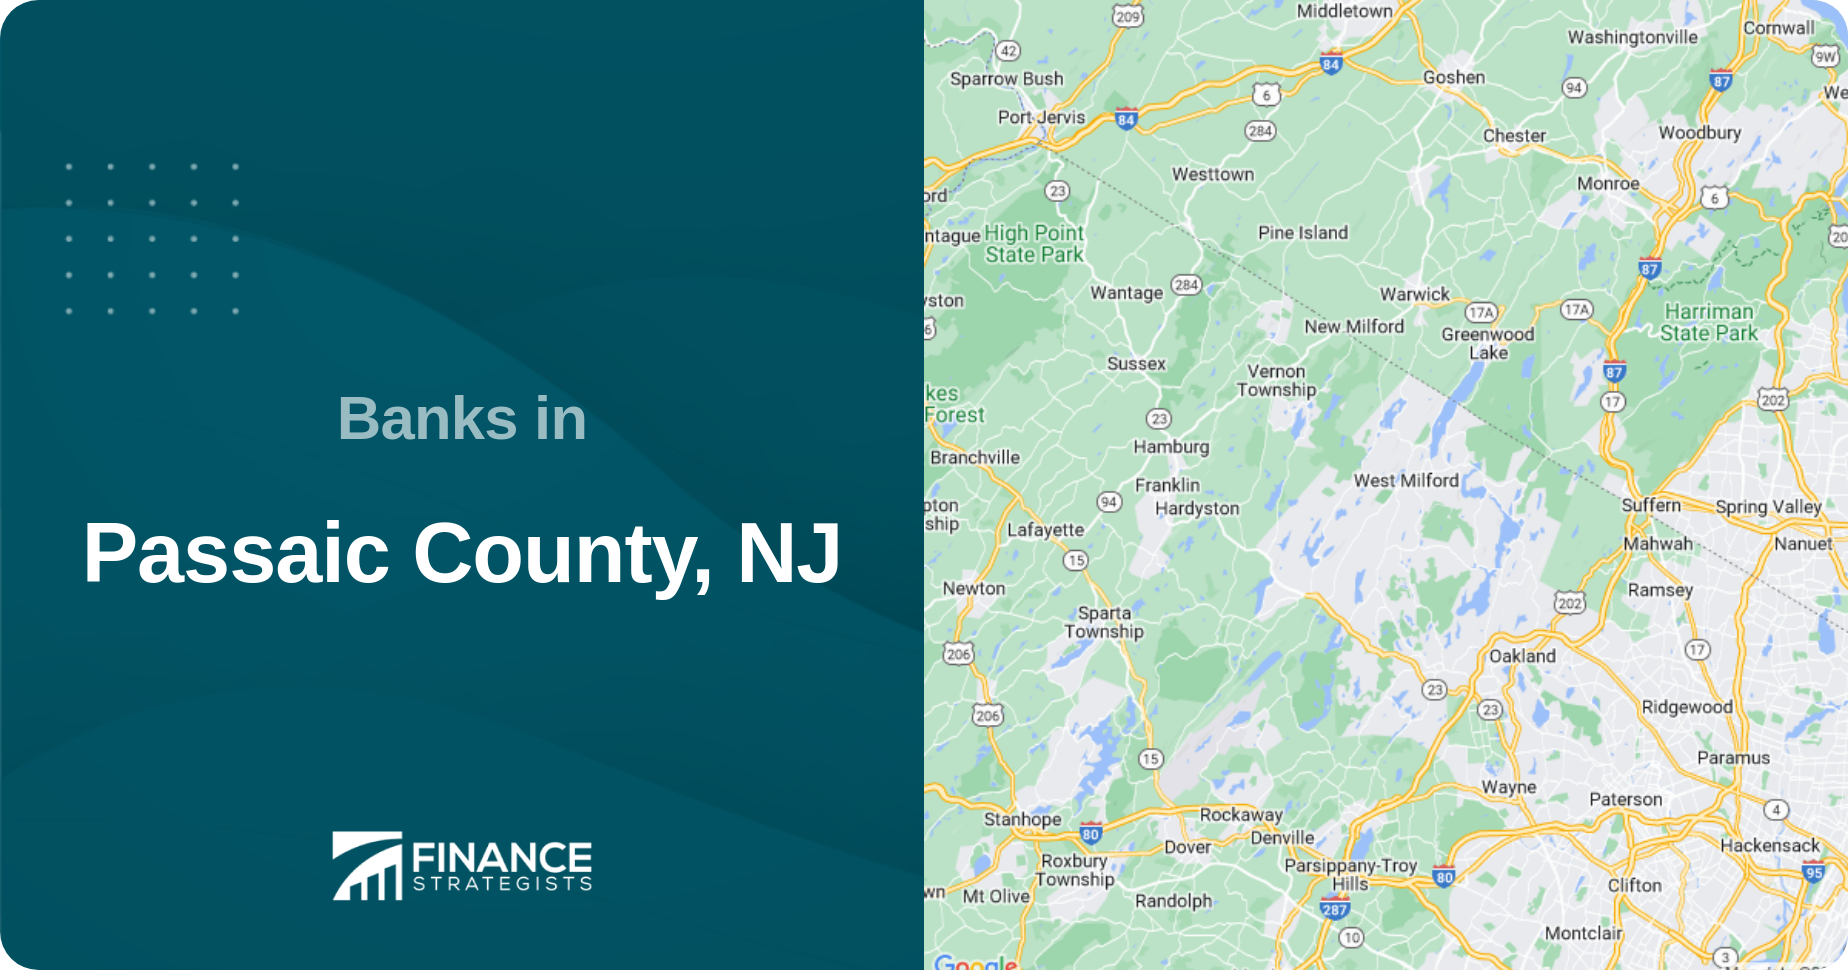 Banks in Passaic County, NJ